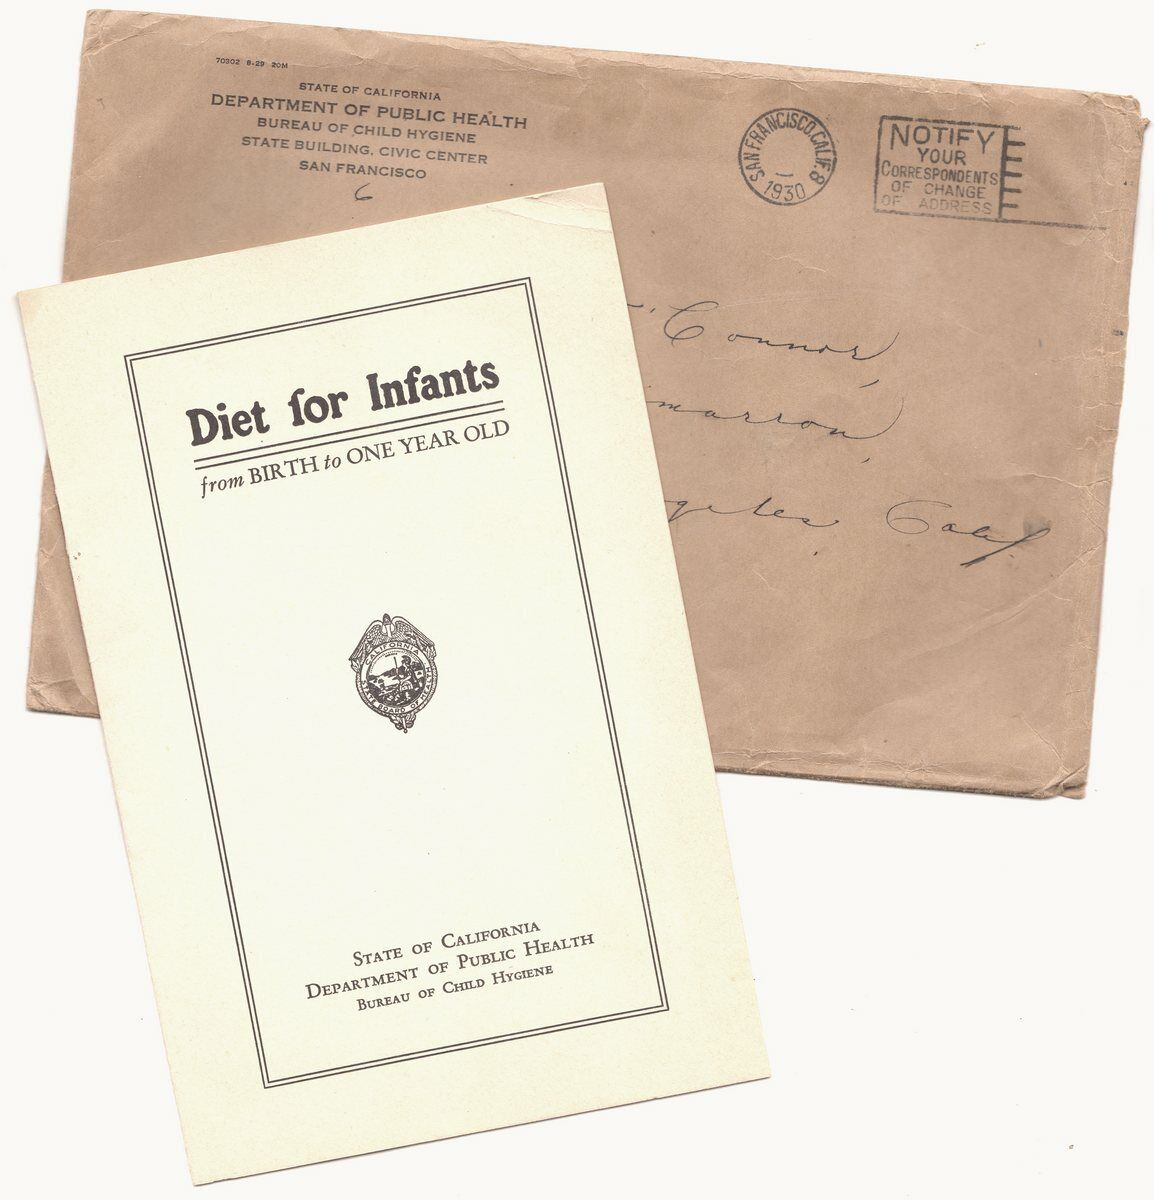 DIET for INFANTS 1931, California Dept of Public Health, Bureau of Child Hygiene